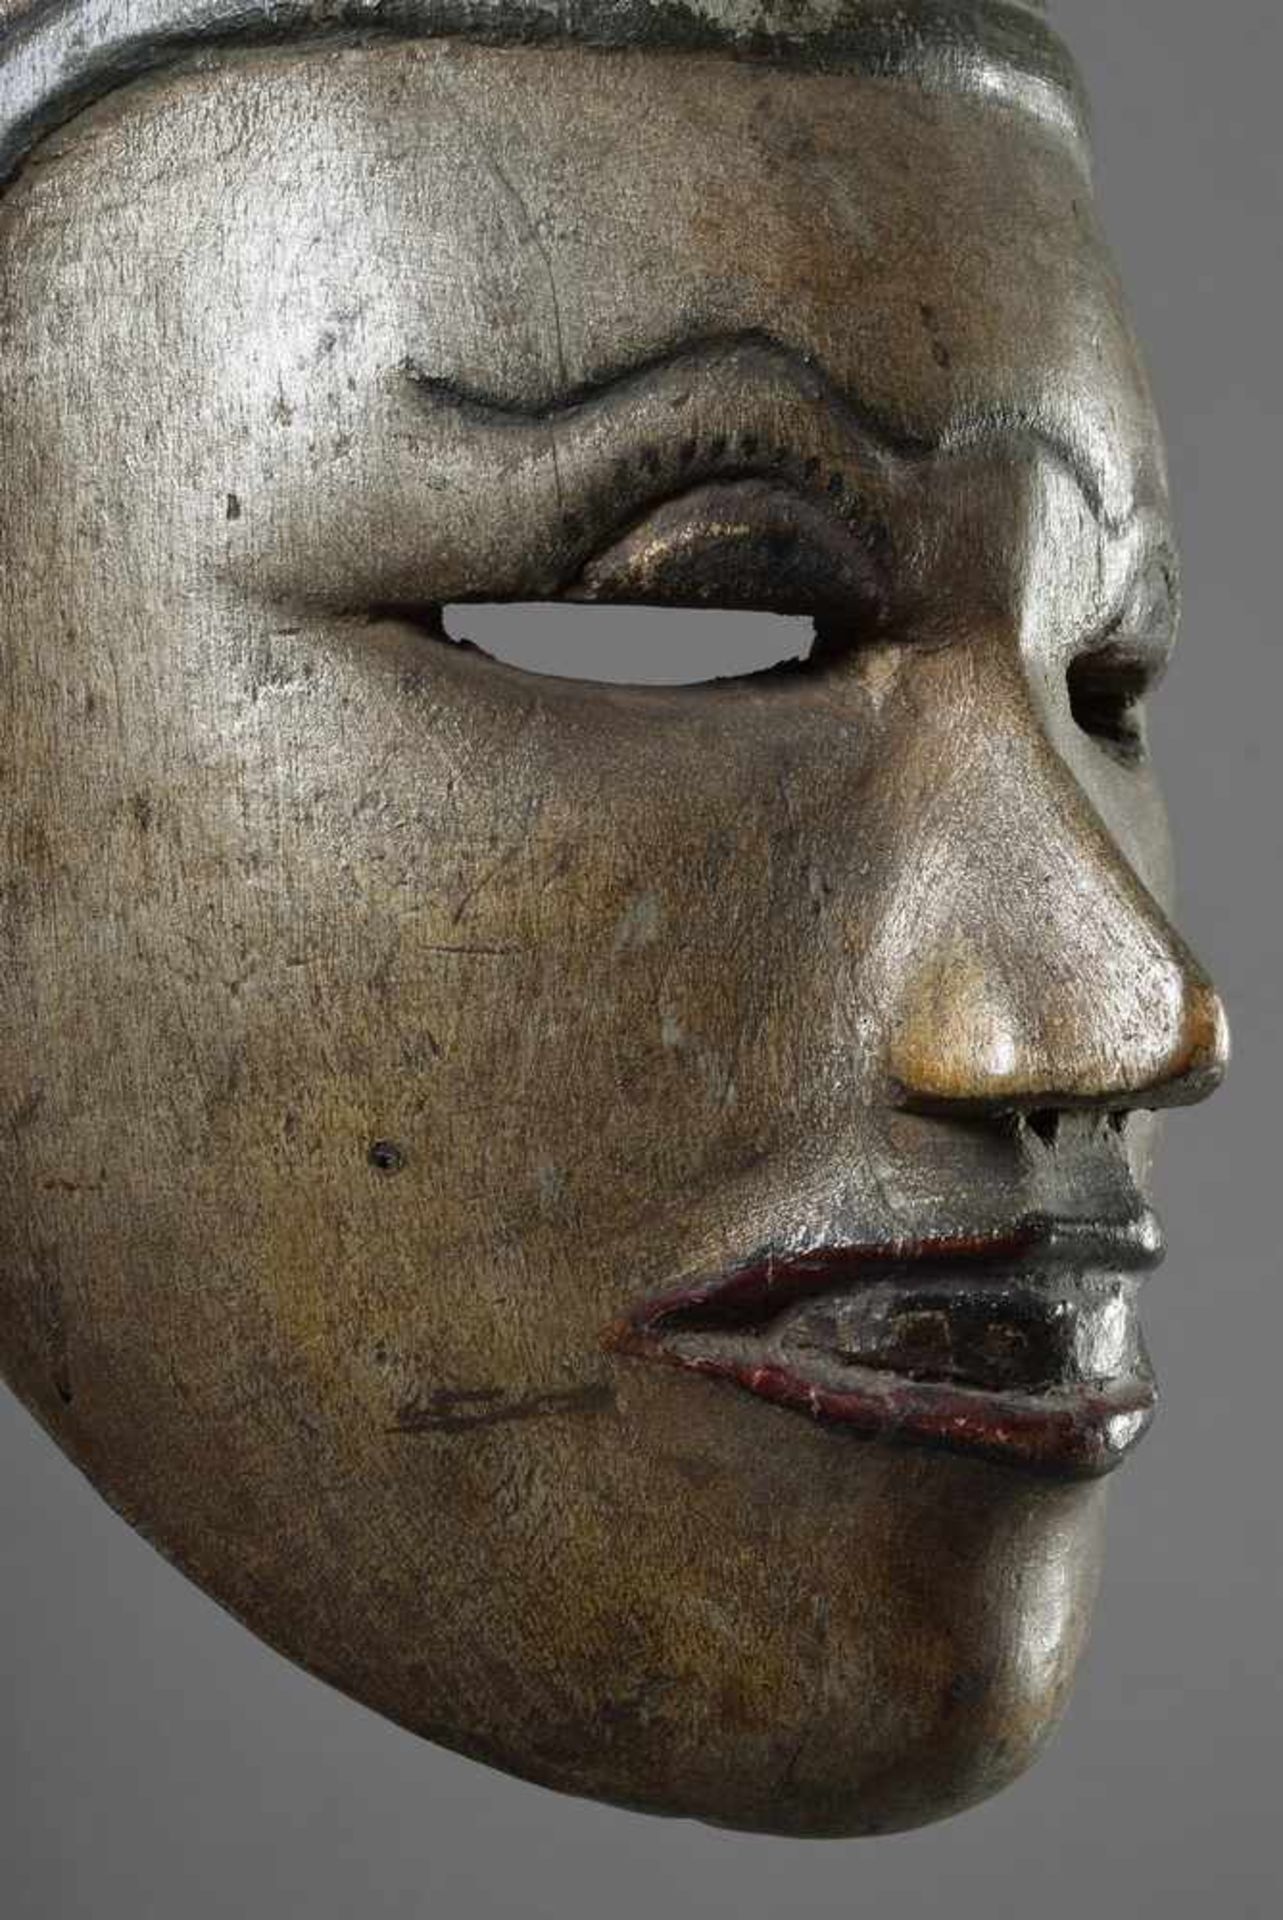 Mahadharata Maske "Pandawa", Holz, farbig gefasst, Java, Indonsien, rustikale Ausführung, 23x17cm, - Bild 2 aus 4